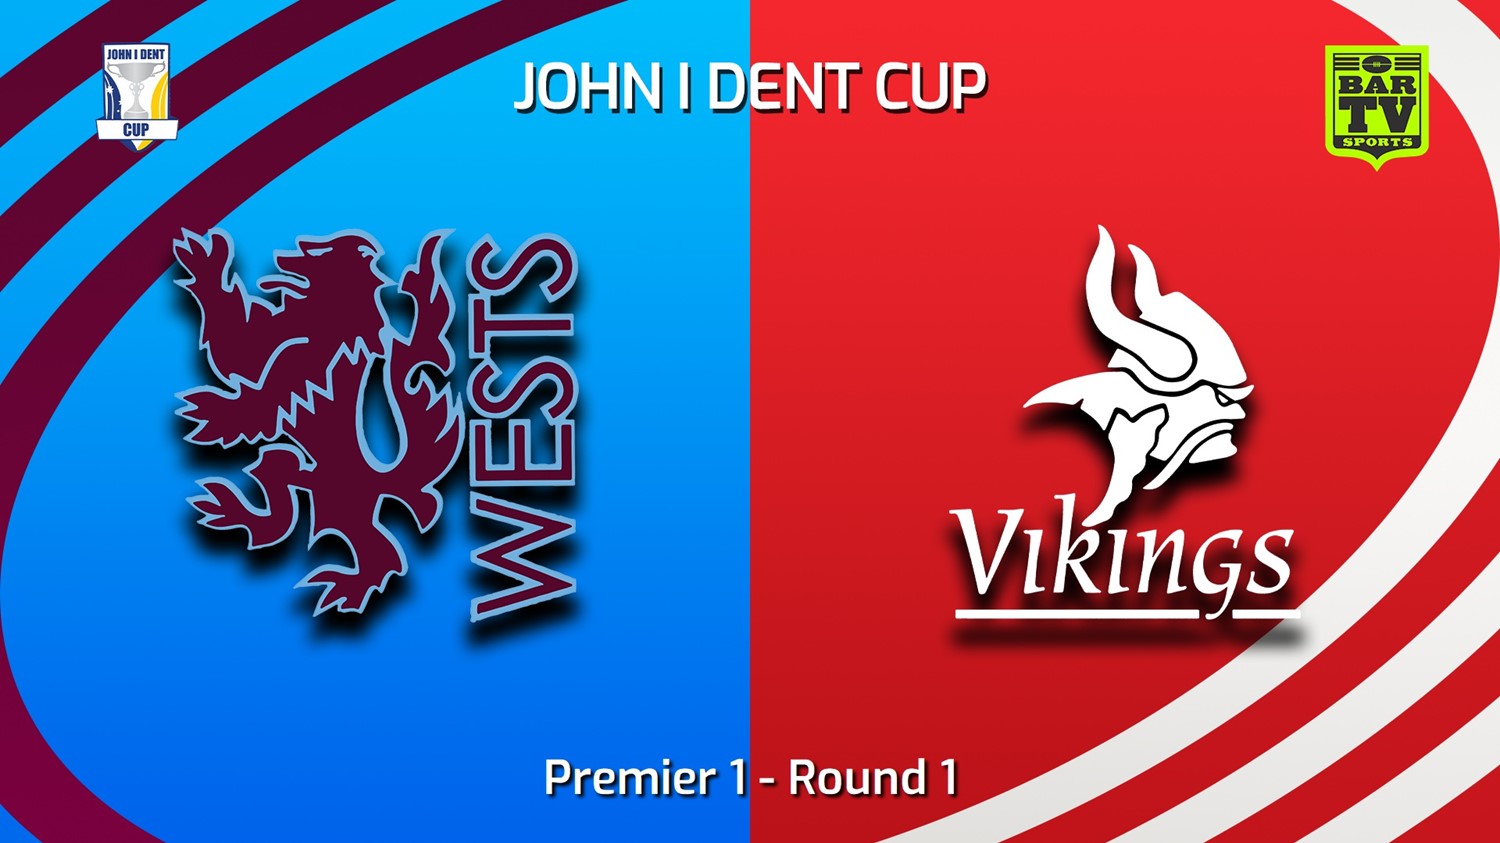 230415-John I Dent (ACT) Round 1 - Premier 1 - Wests Lions v Tuggeranong Vikings Minigame Slate Image